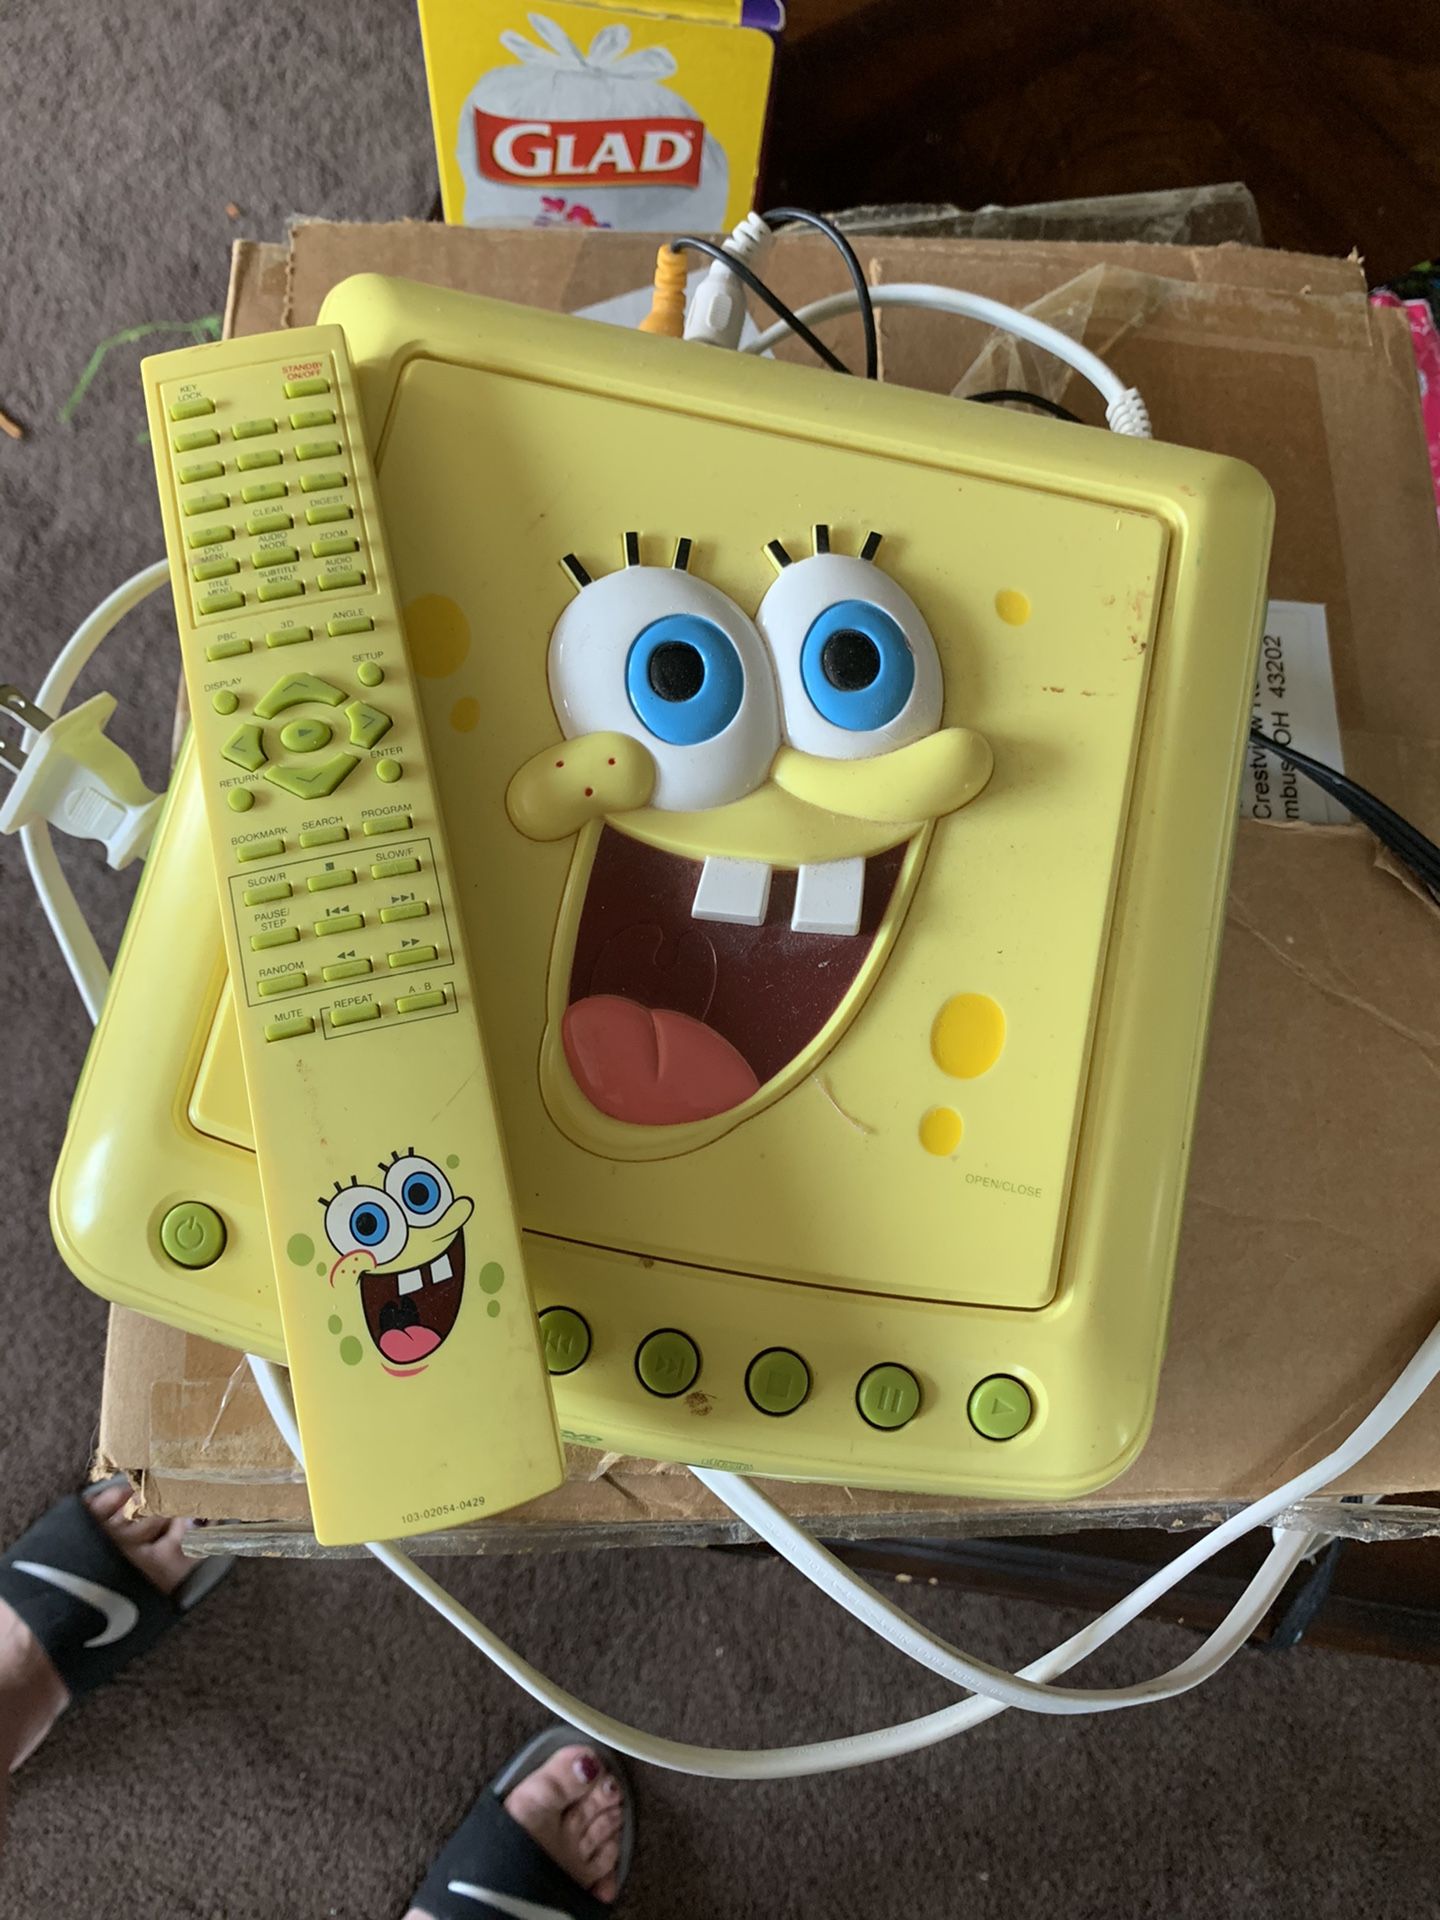 Spongebob DVD player